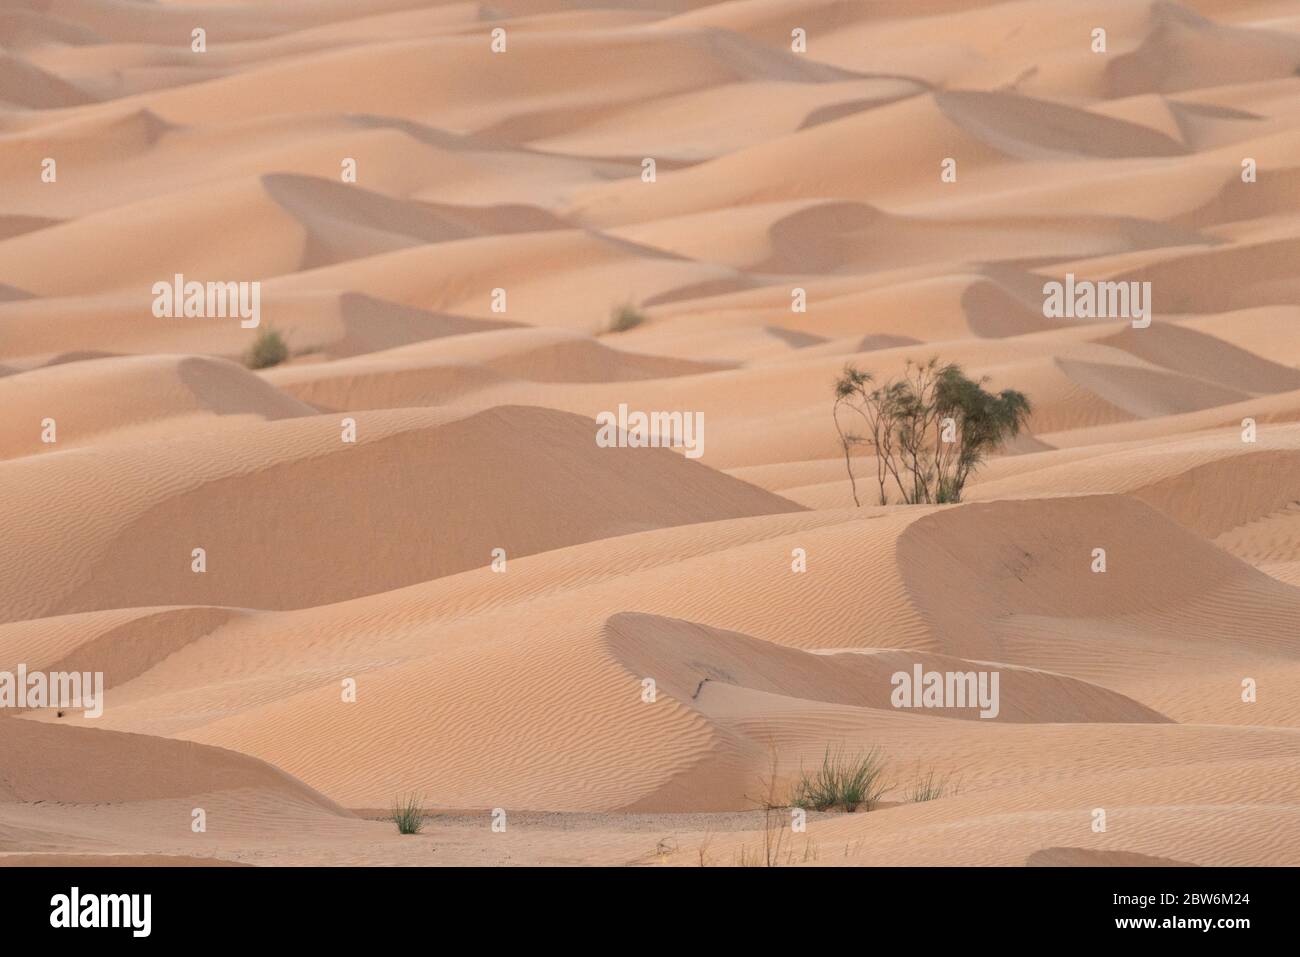 View of the Desert in Tunisia Stock Photo